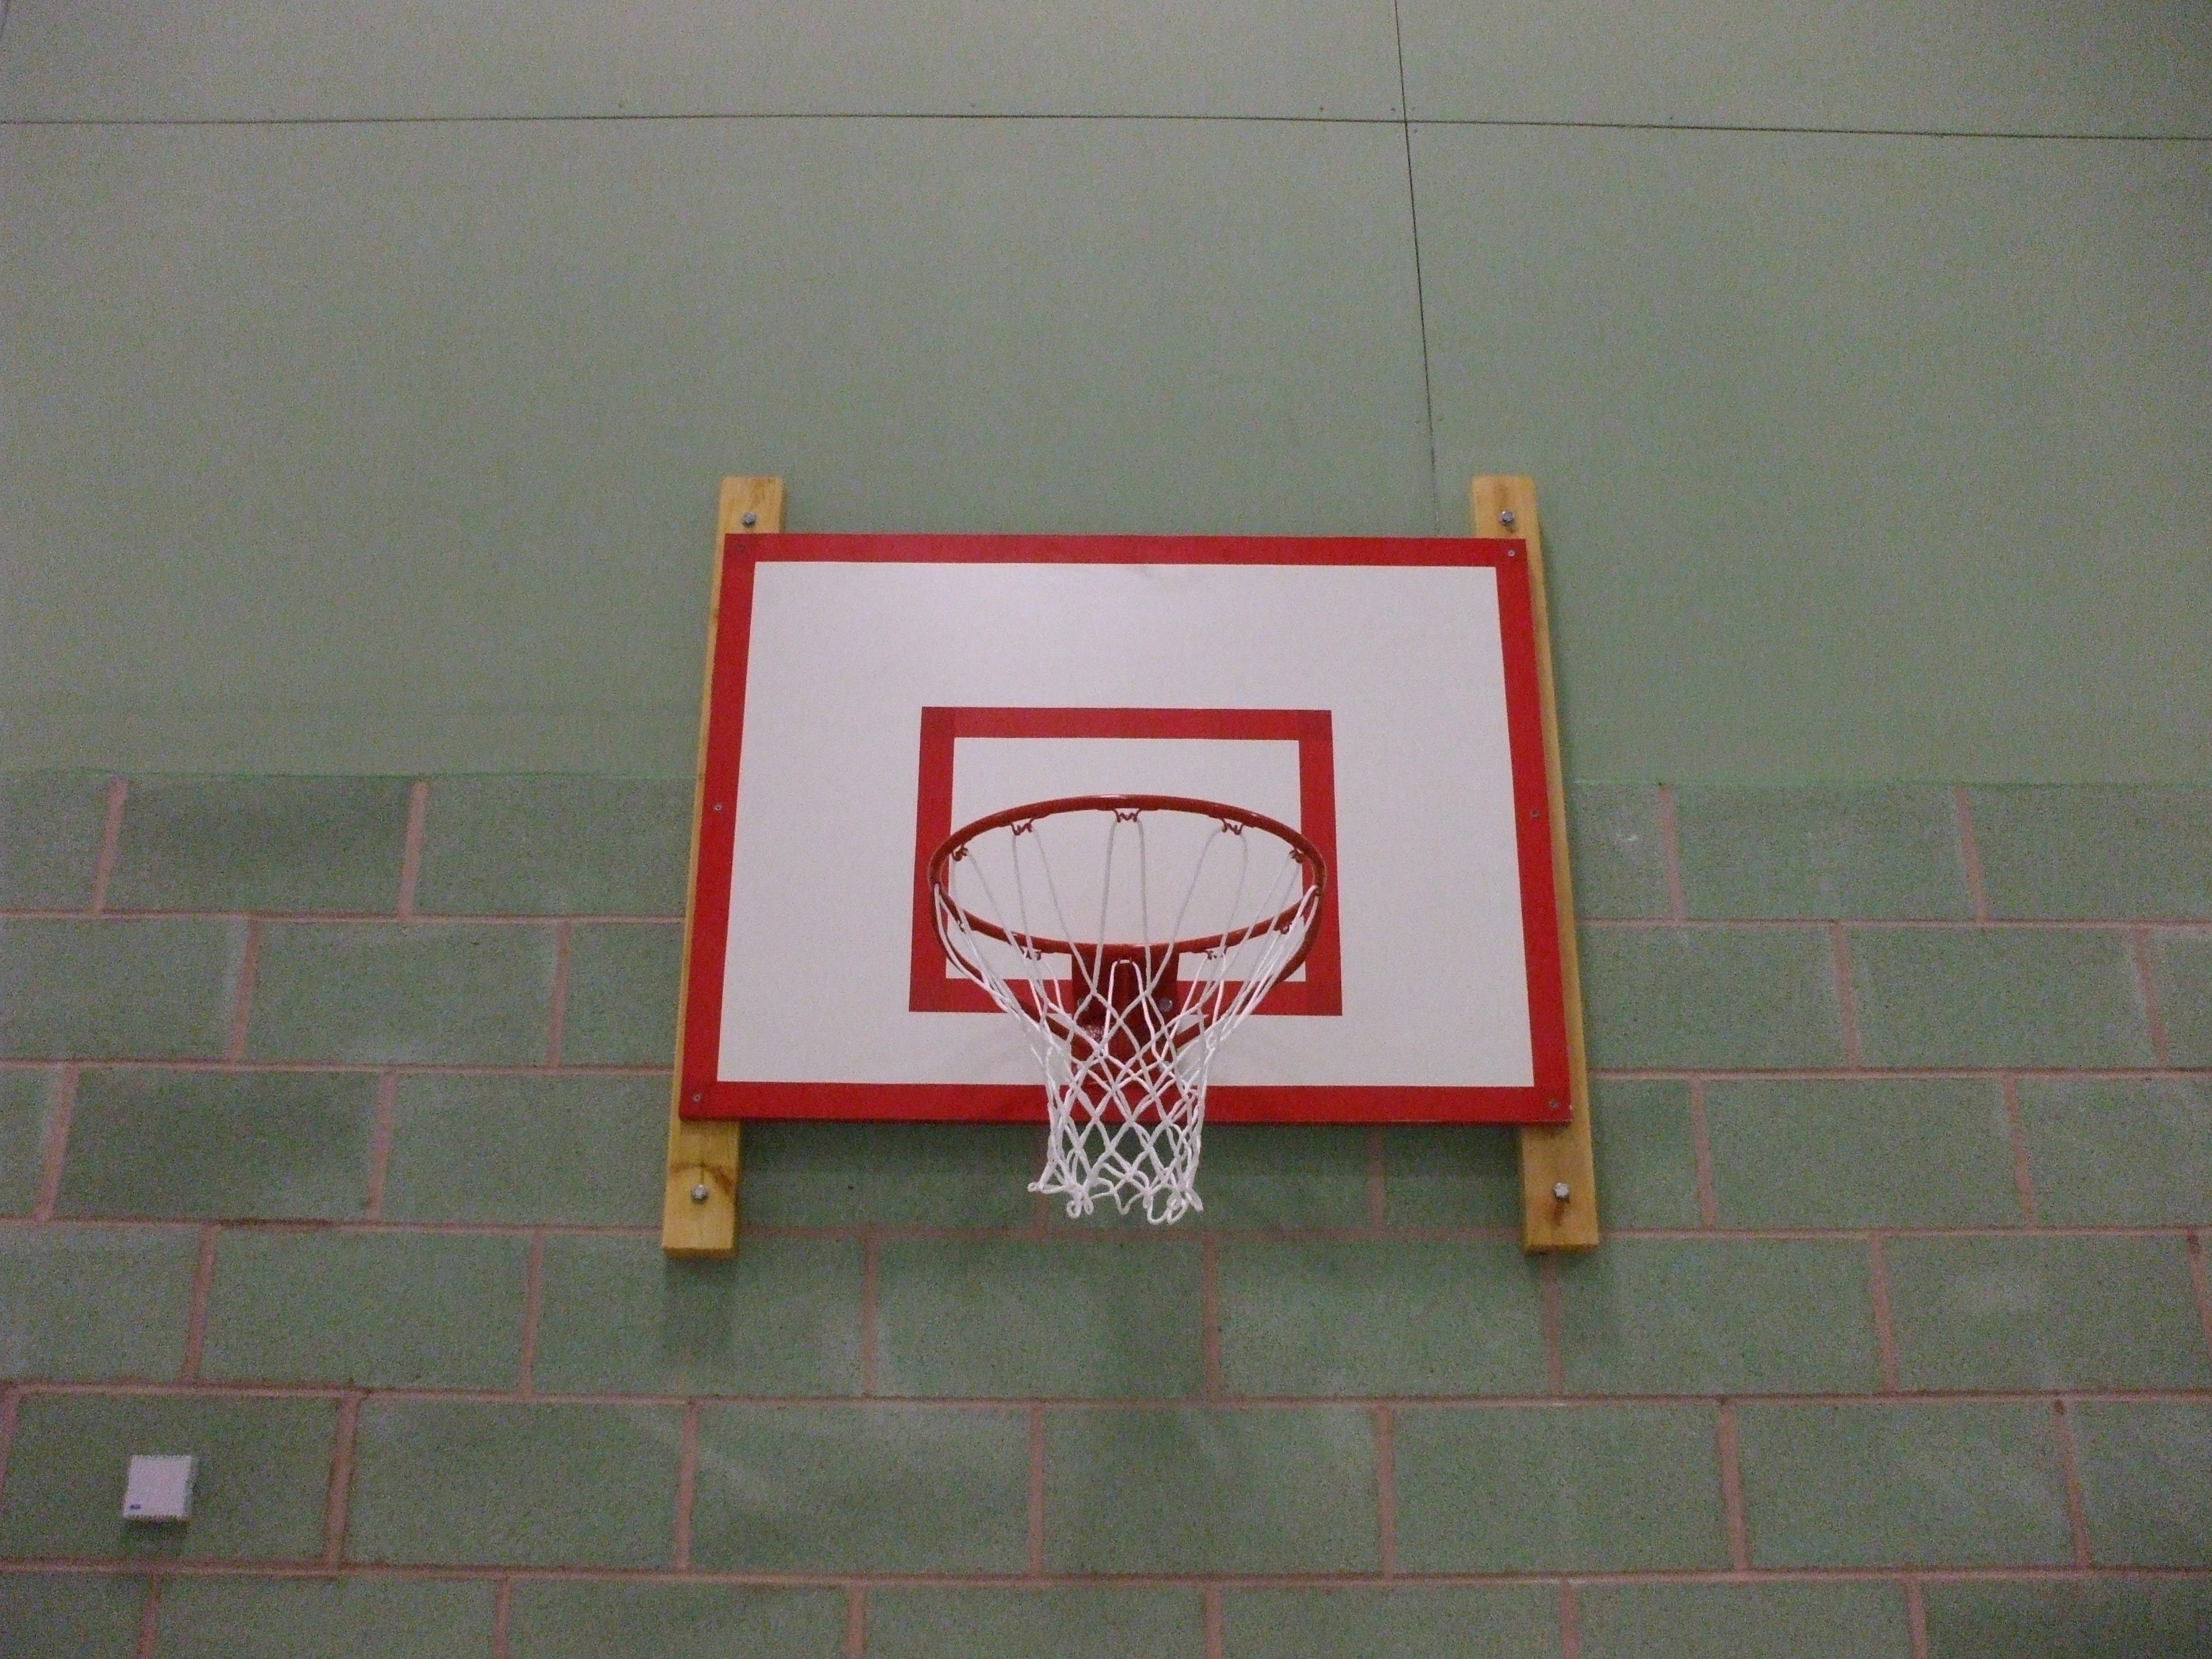 Flat fixed practice basketball goal